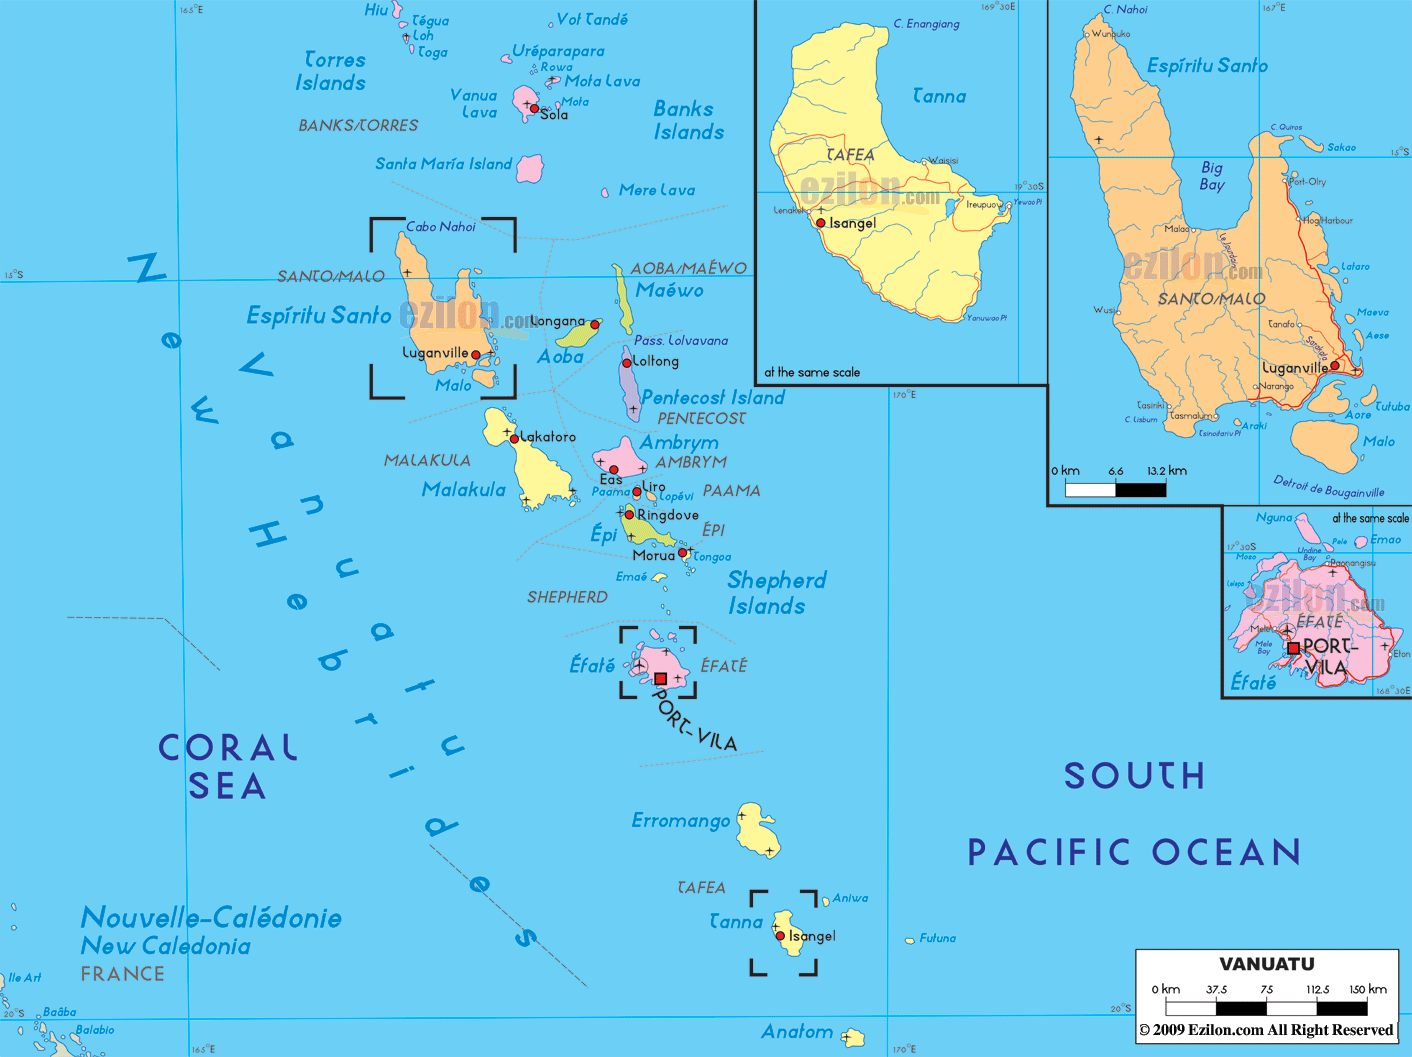 port vila vanuatu map Detailed Political Map Of Vanuatu Ezilon Maps port vila vanuatu map